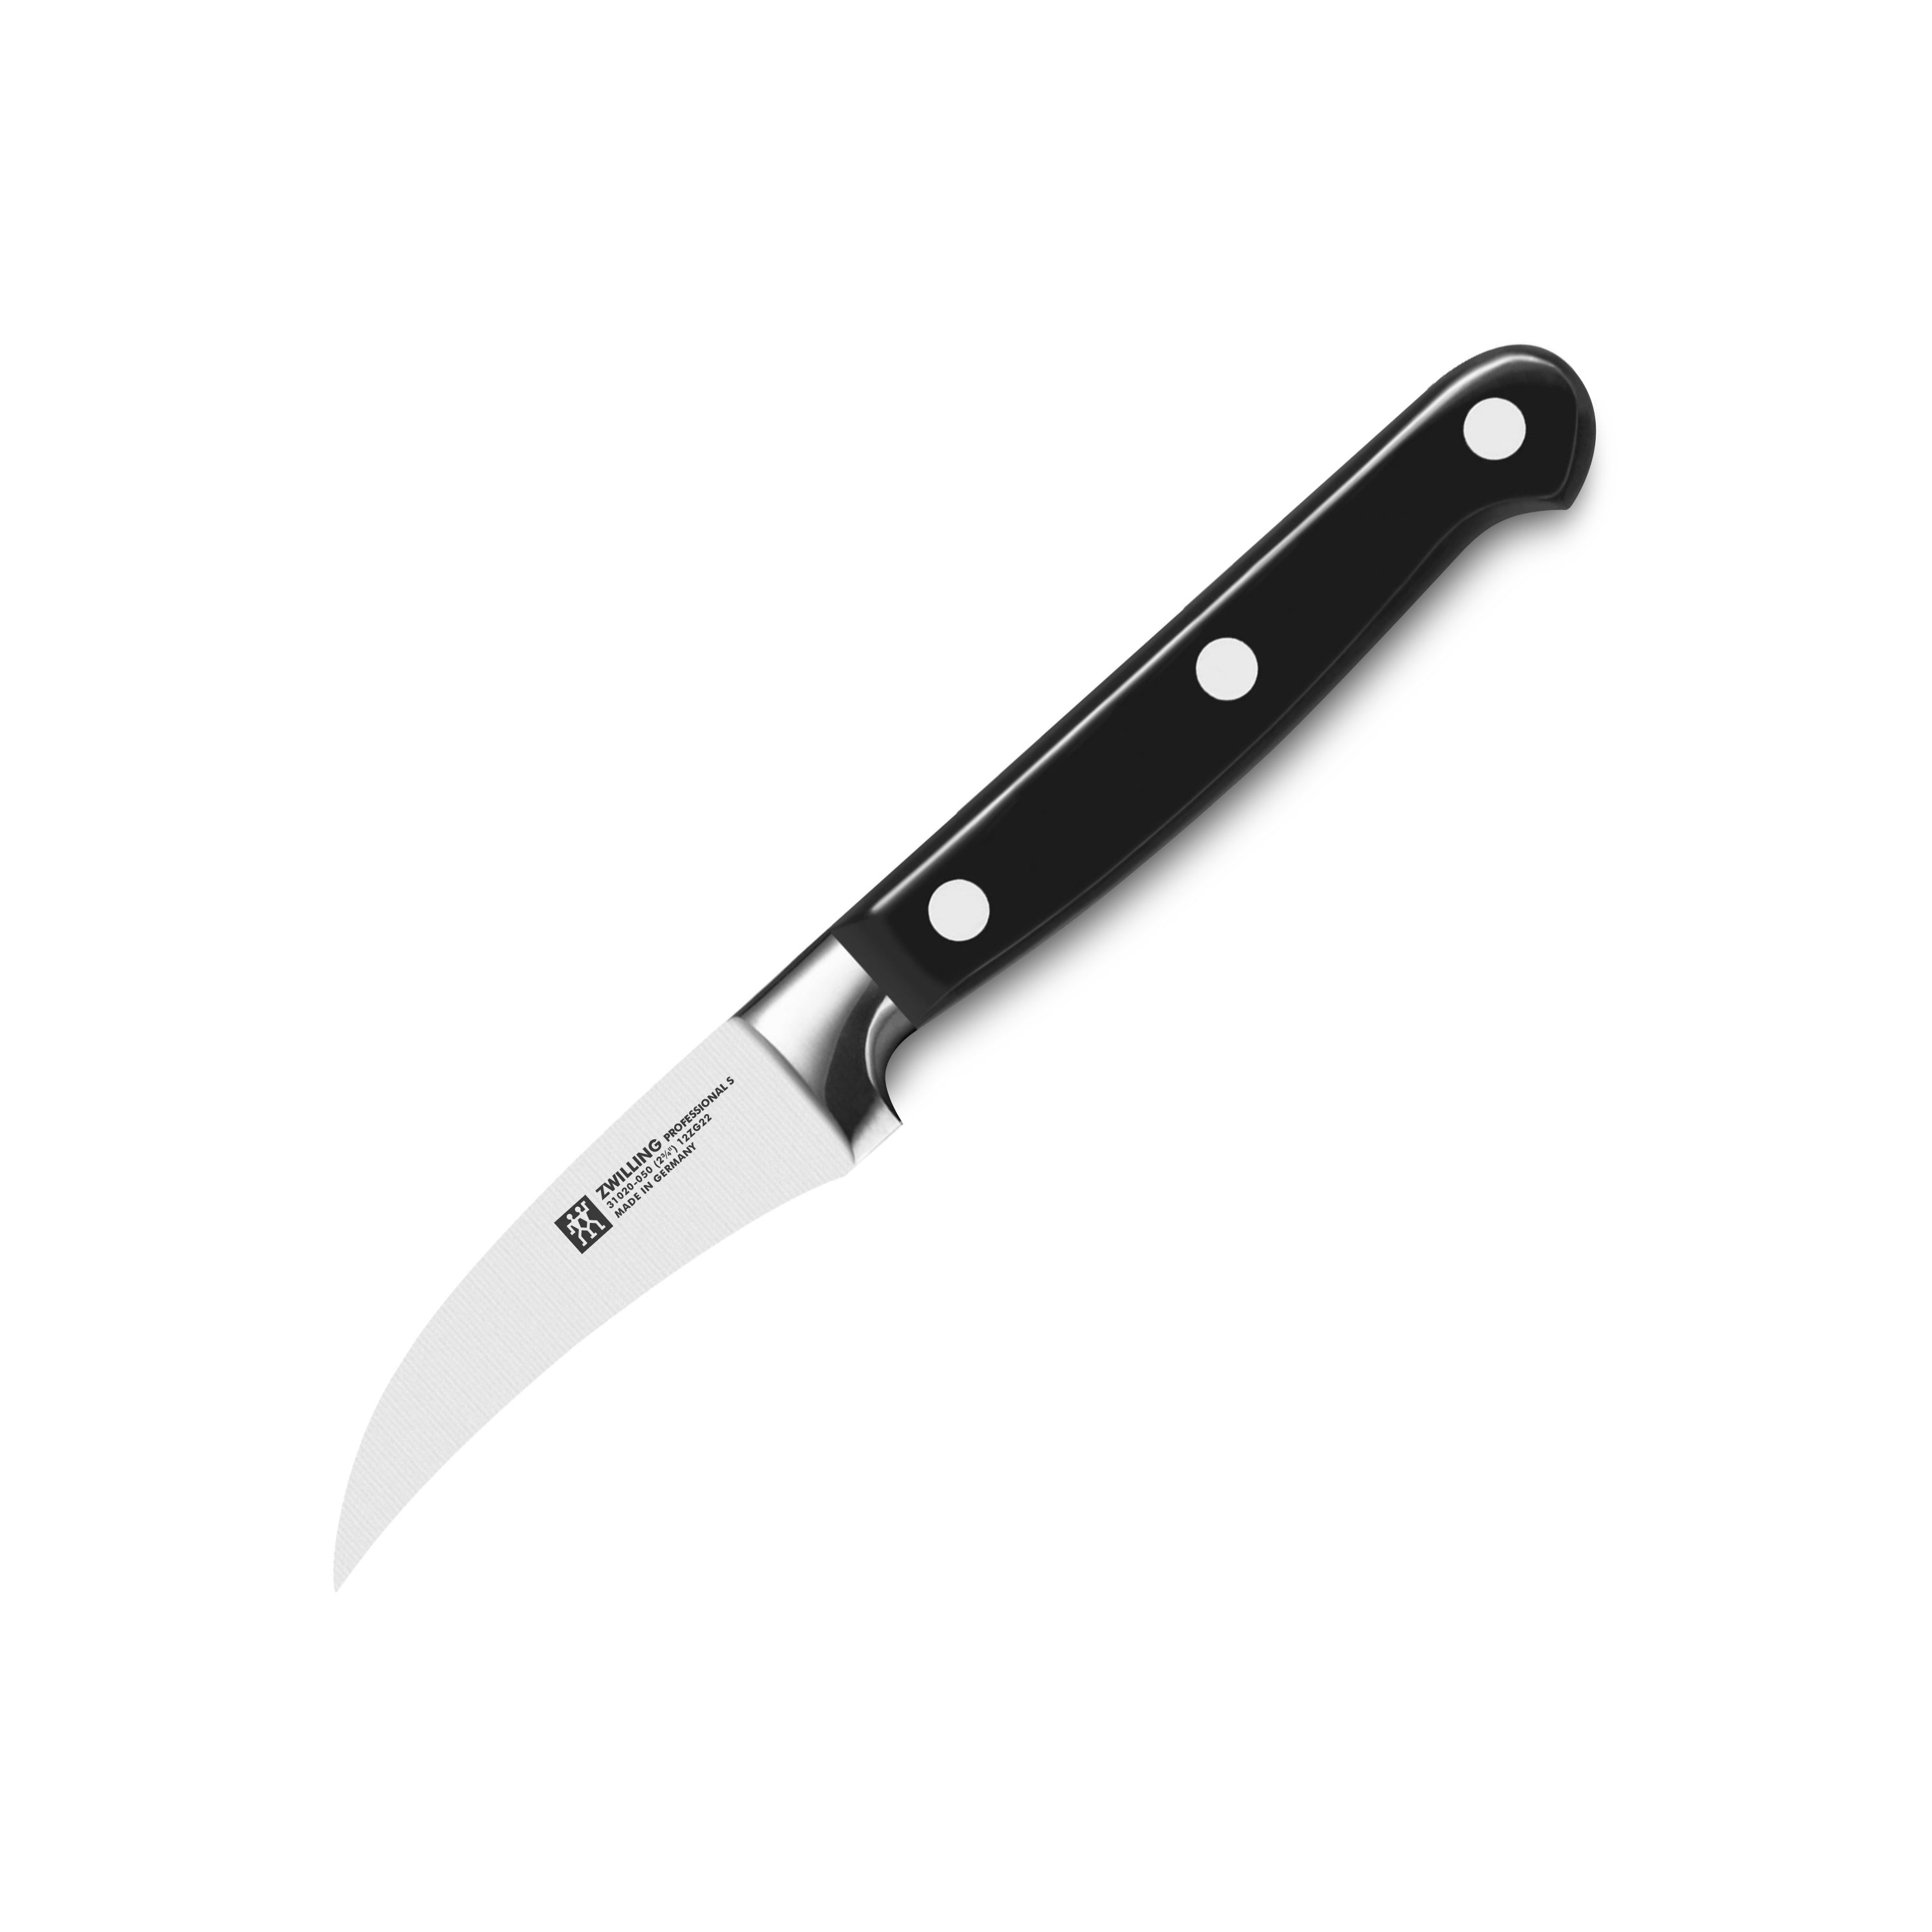 German knife-maker company brand Zwilling J. A. Henckels store in